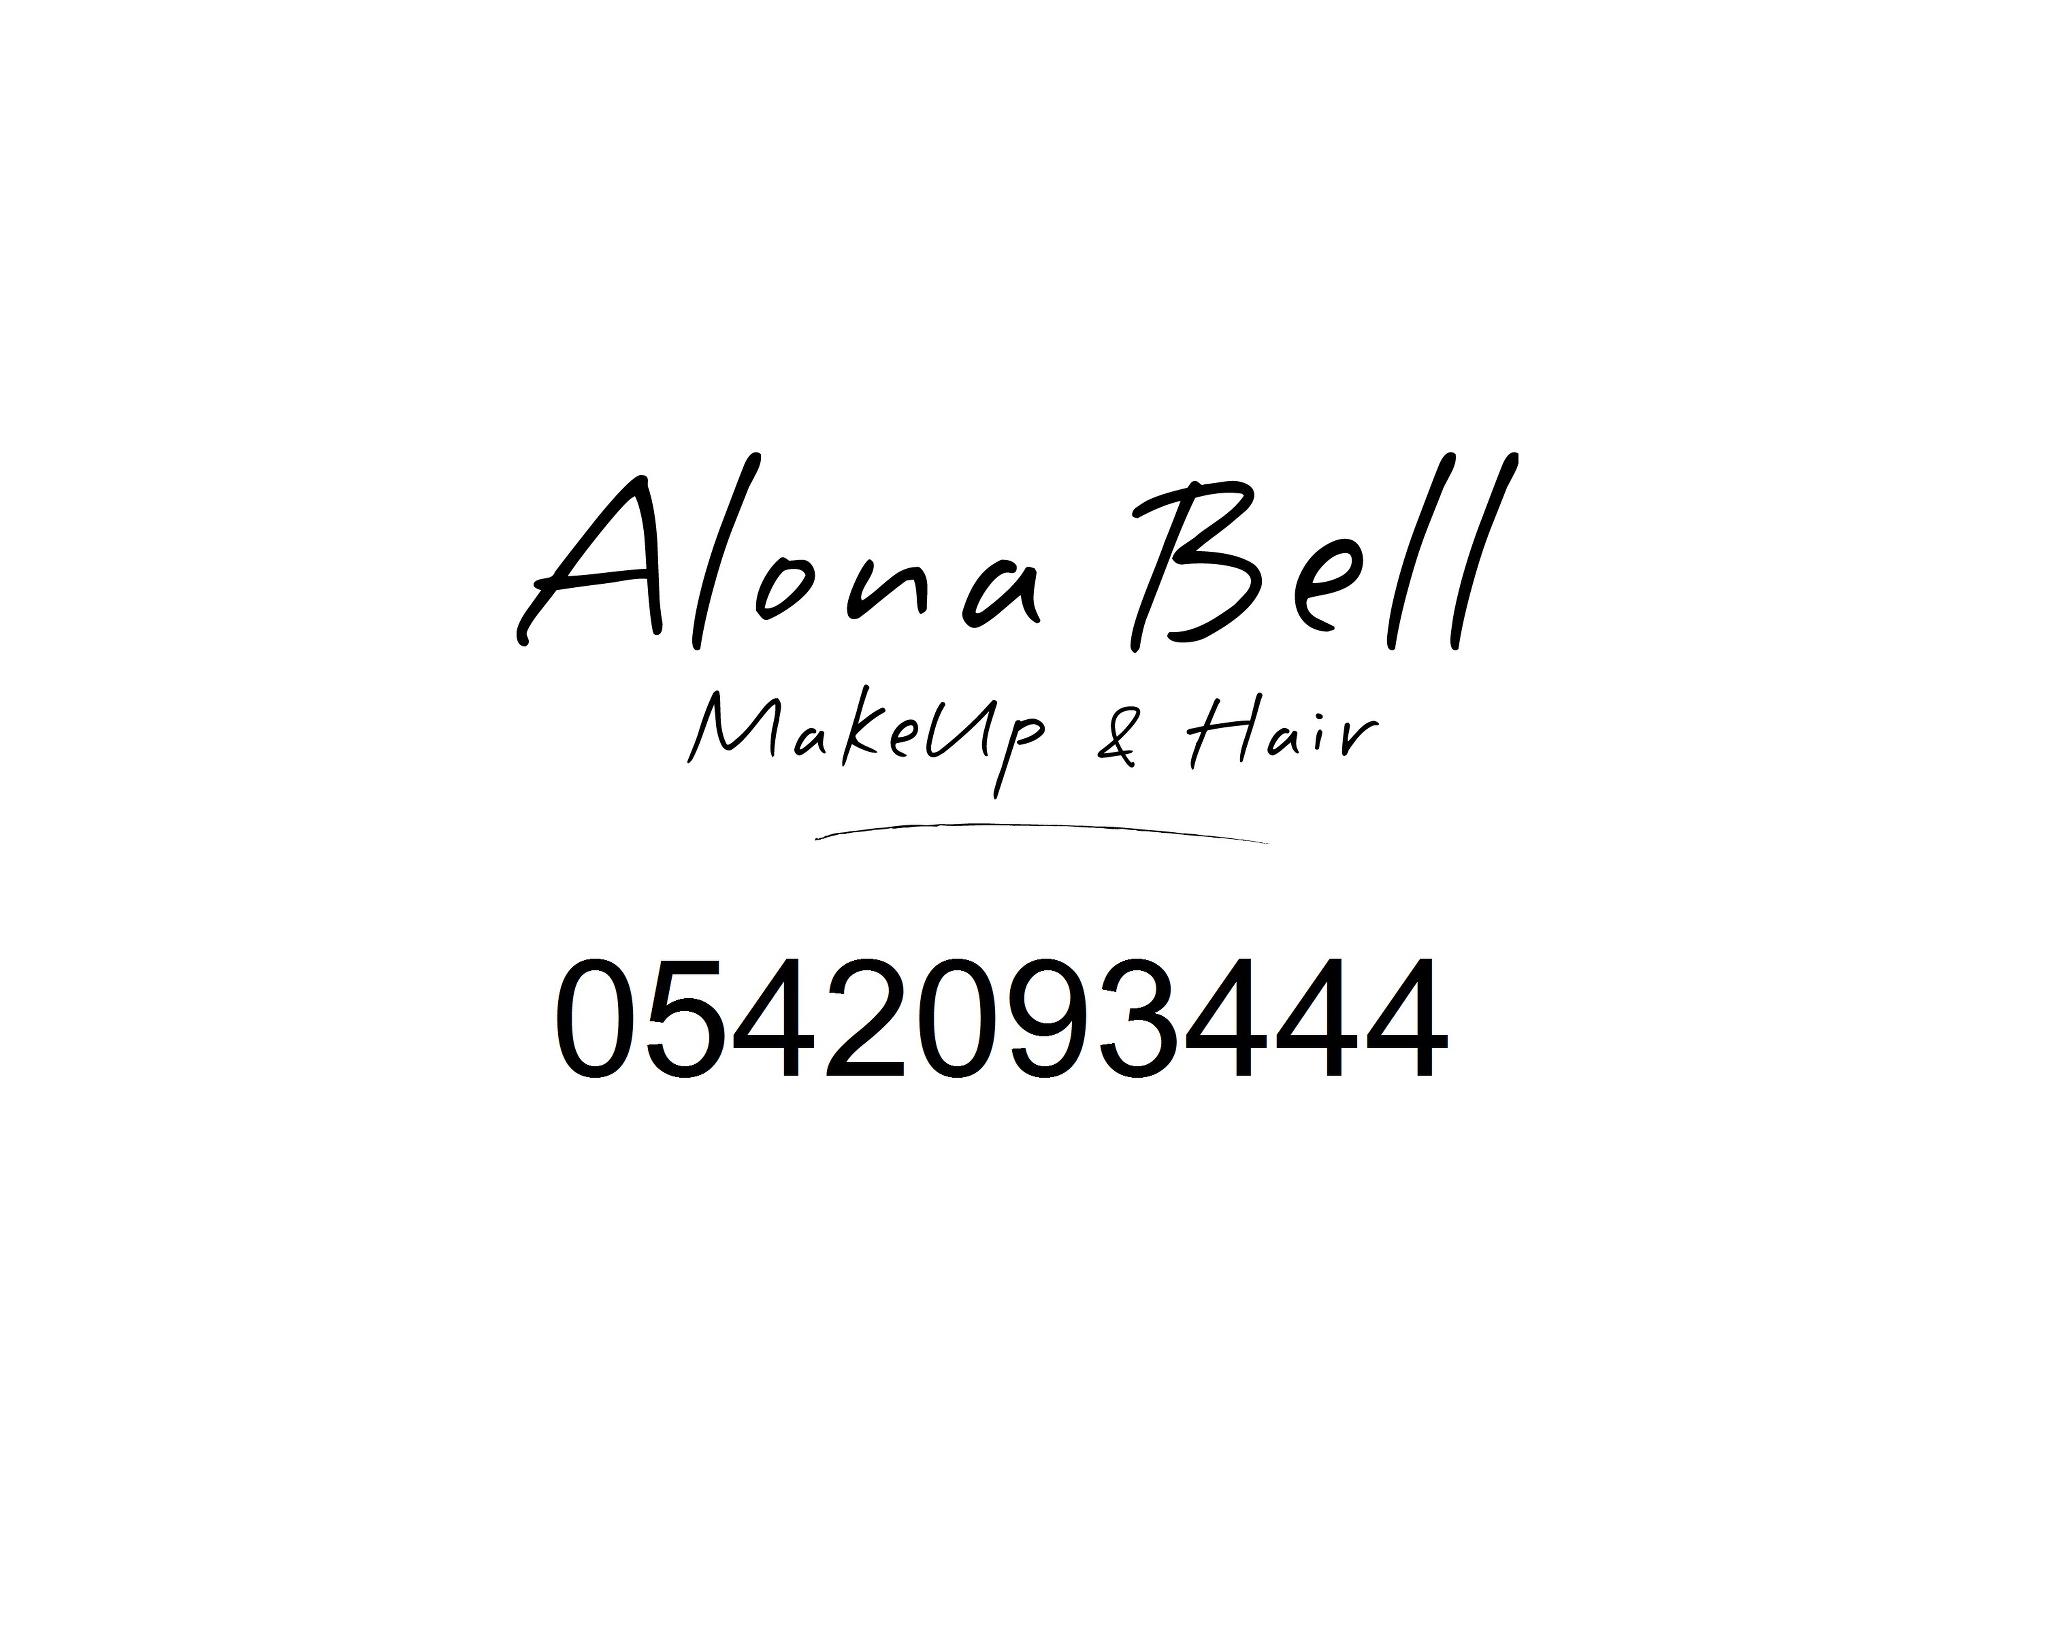 Alona Bell bridal makeup & hair |  אלונה בל איפור ושיער לכלה